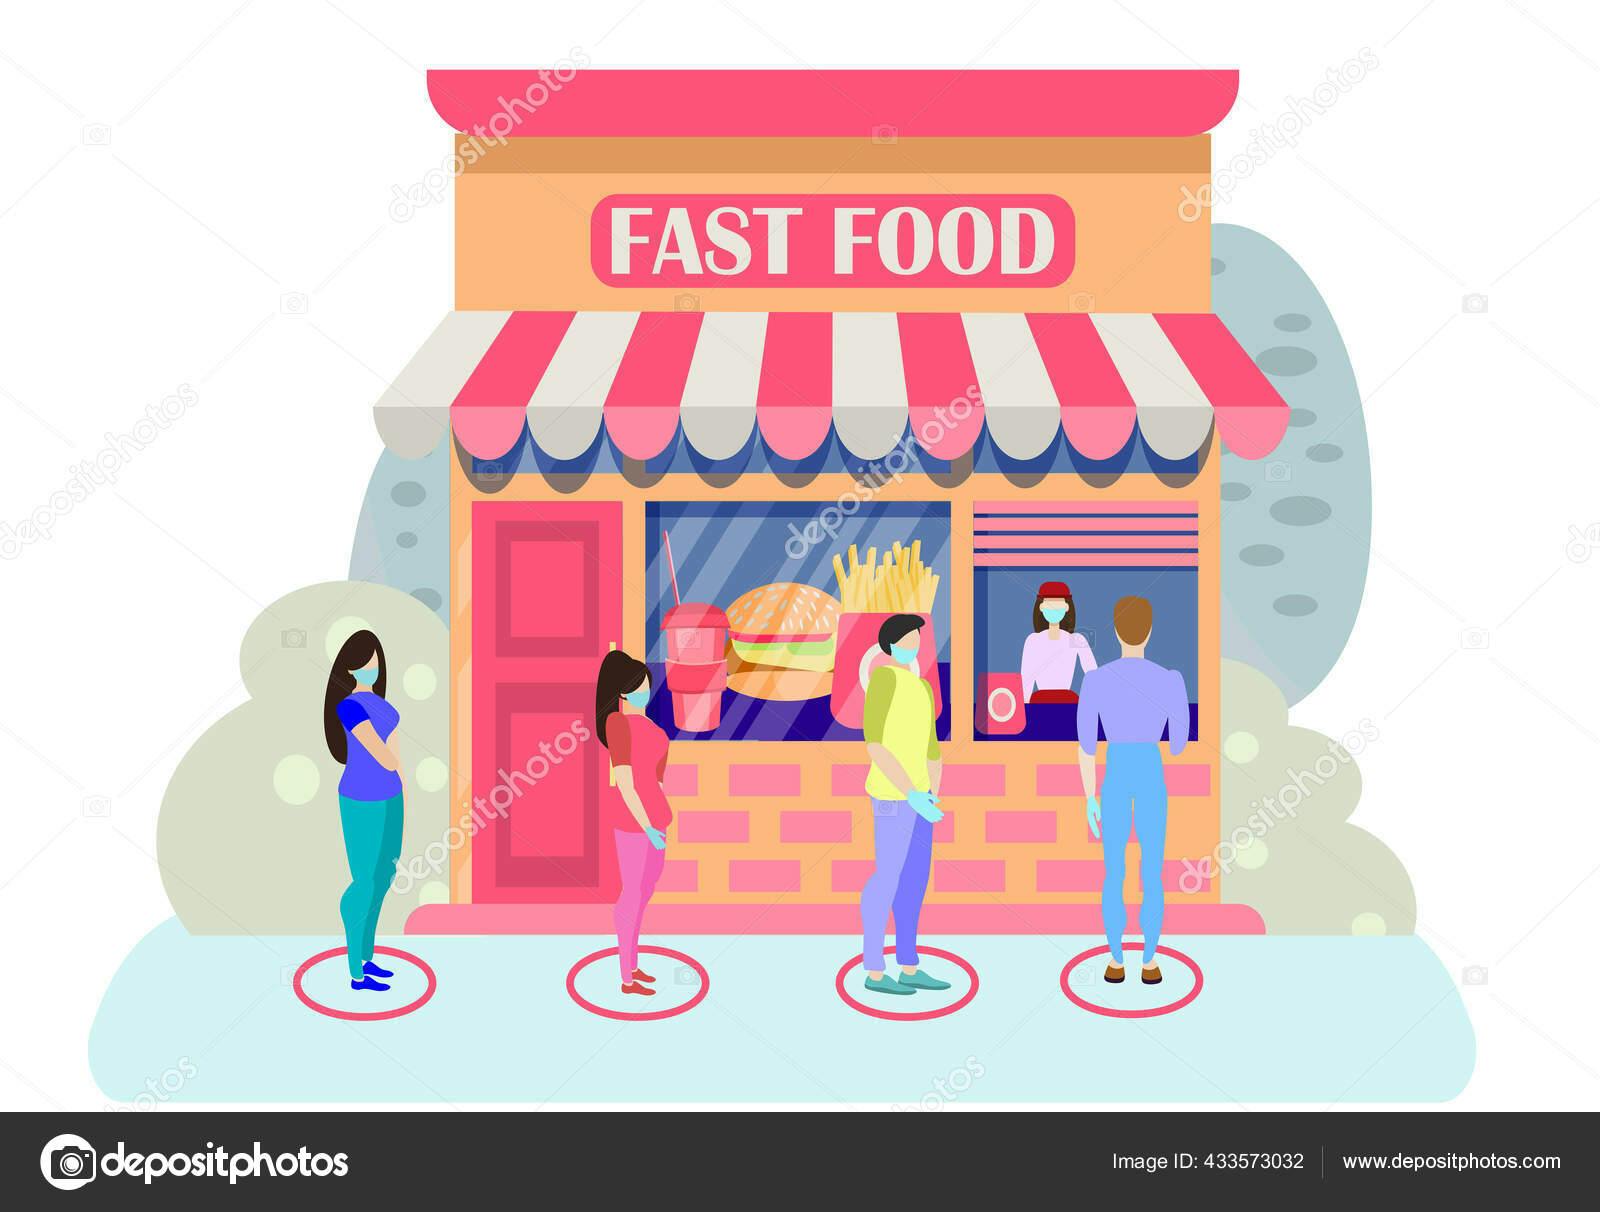 depositphotos_433573032-stock-illustration-queue-fast-food-restaurant-concept.jpg